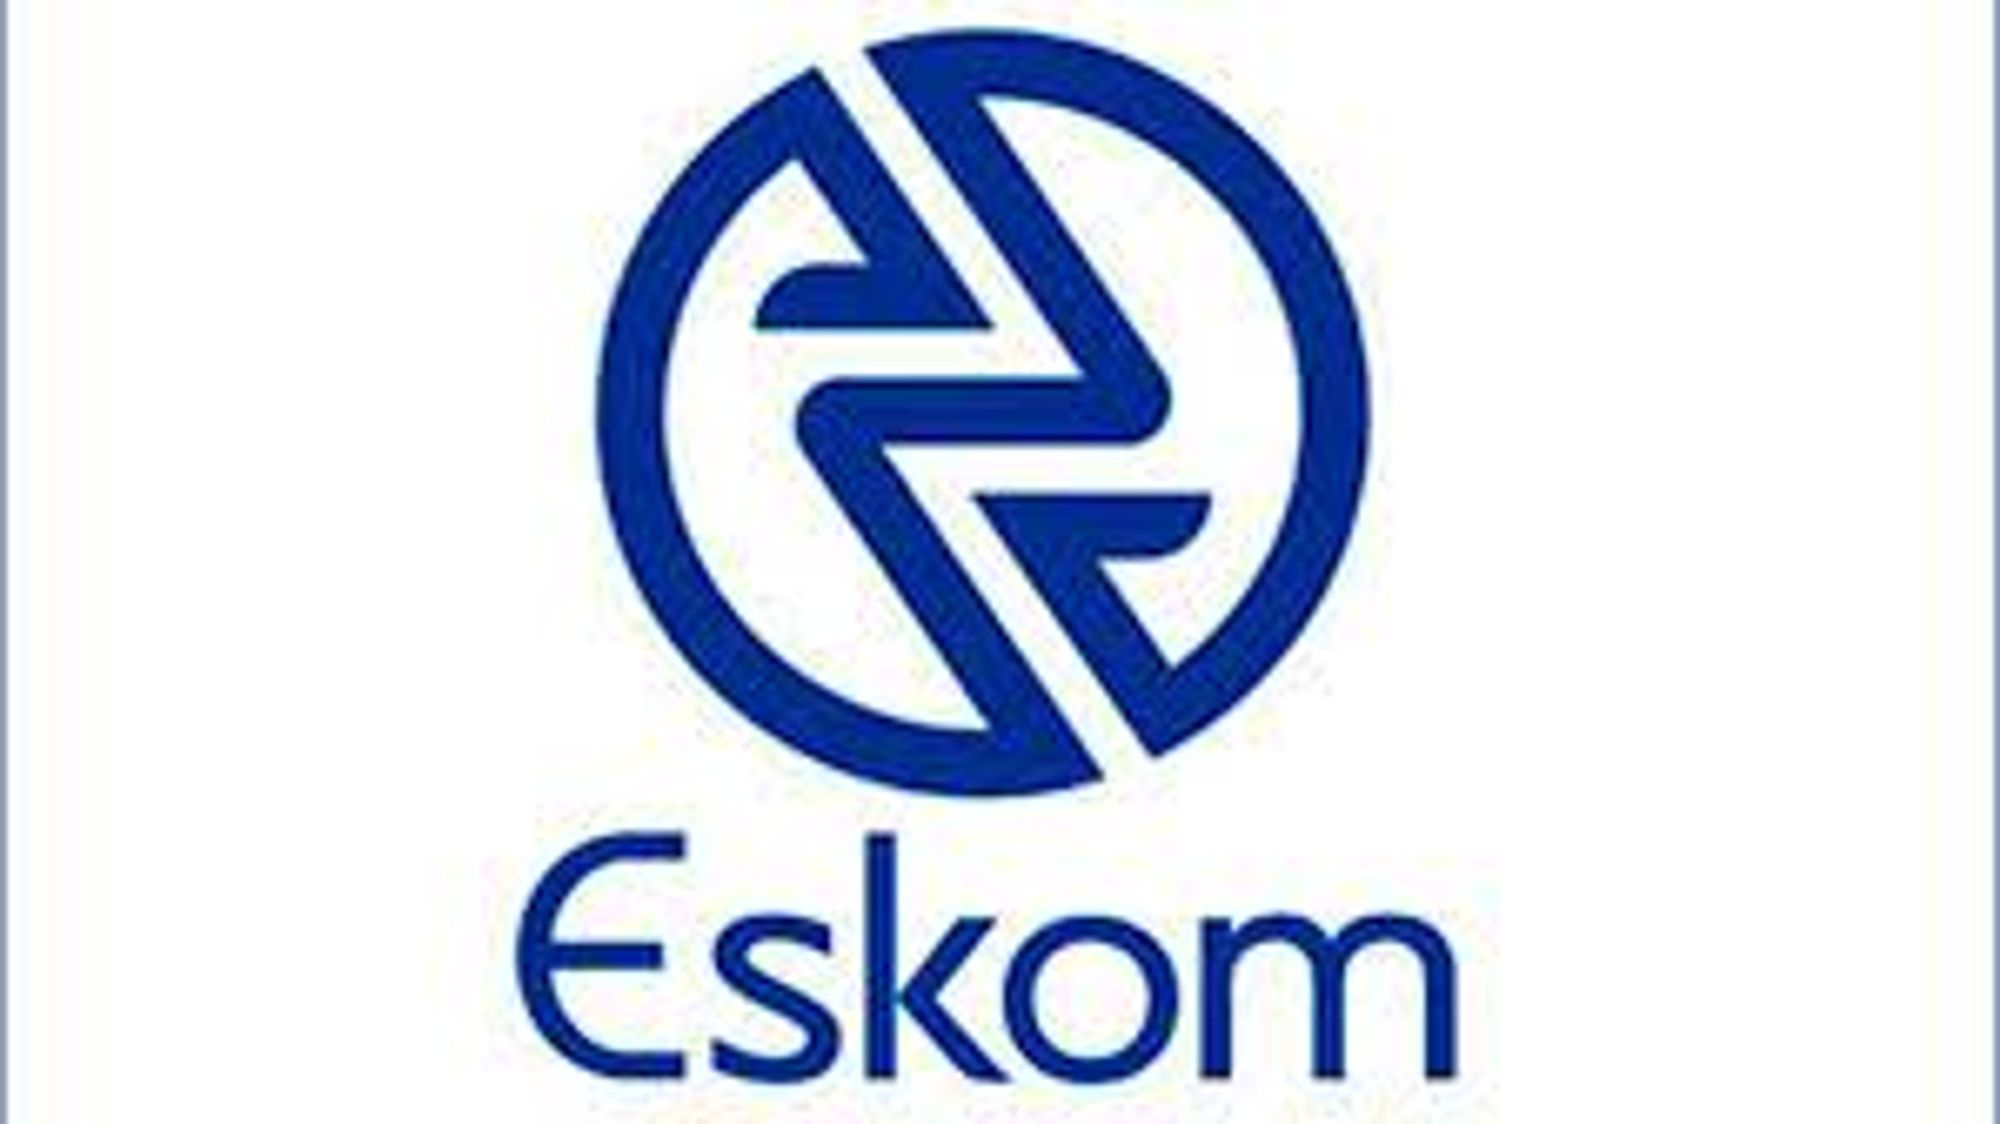 Eskom Holdings SOC Ltd